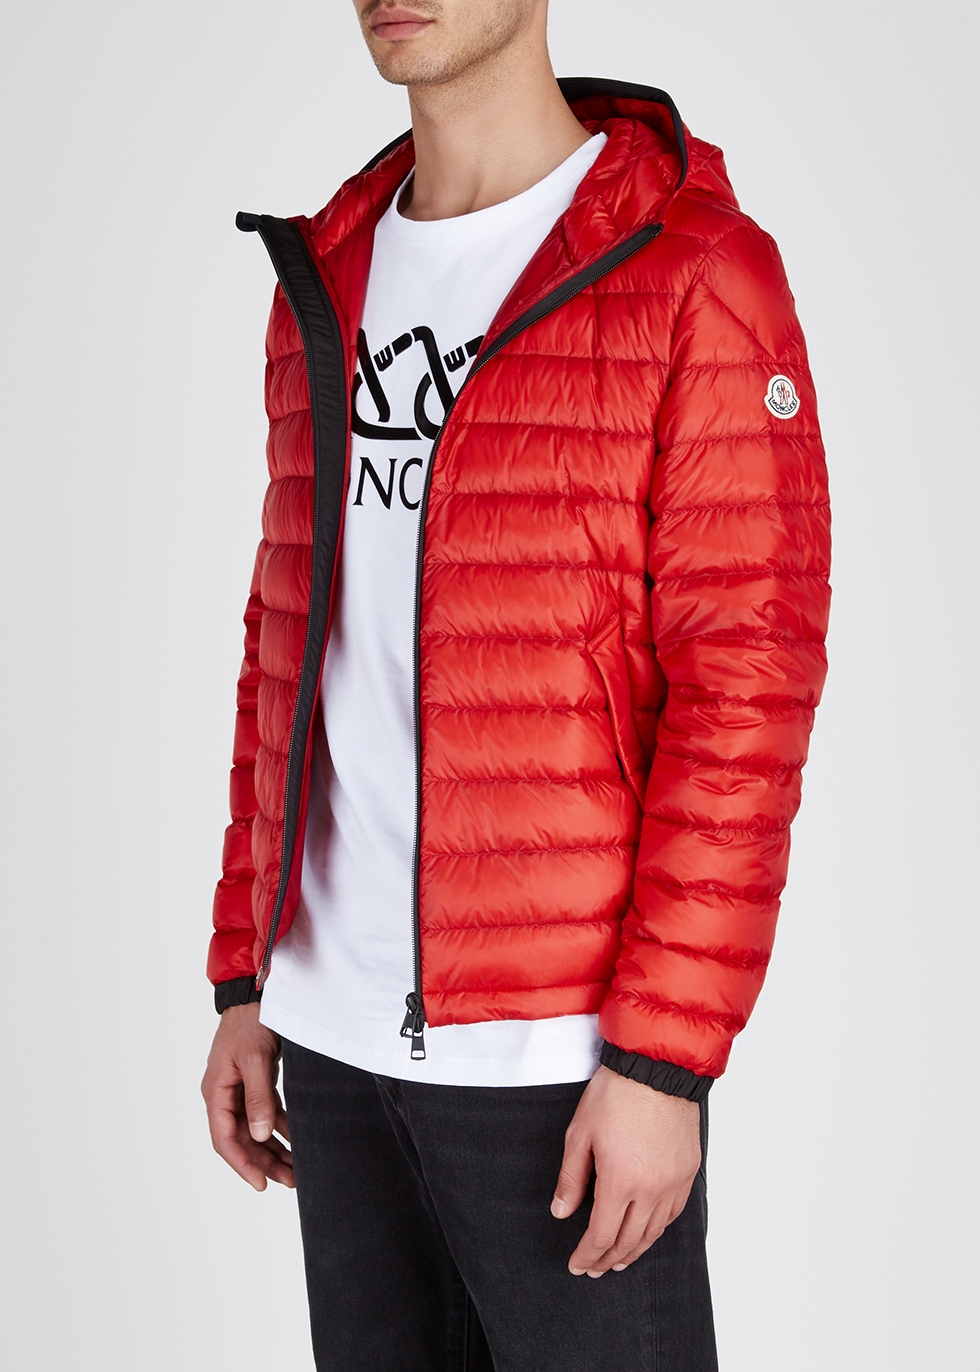 moncler red jacket